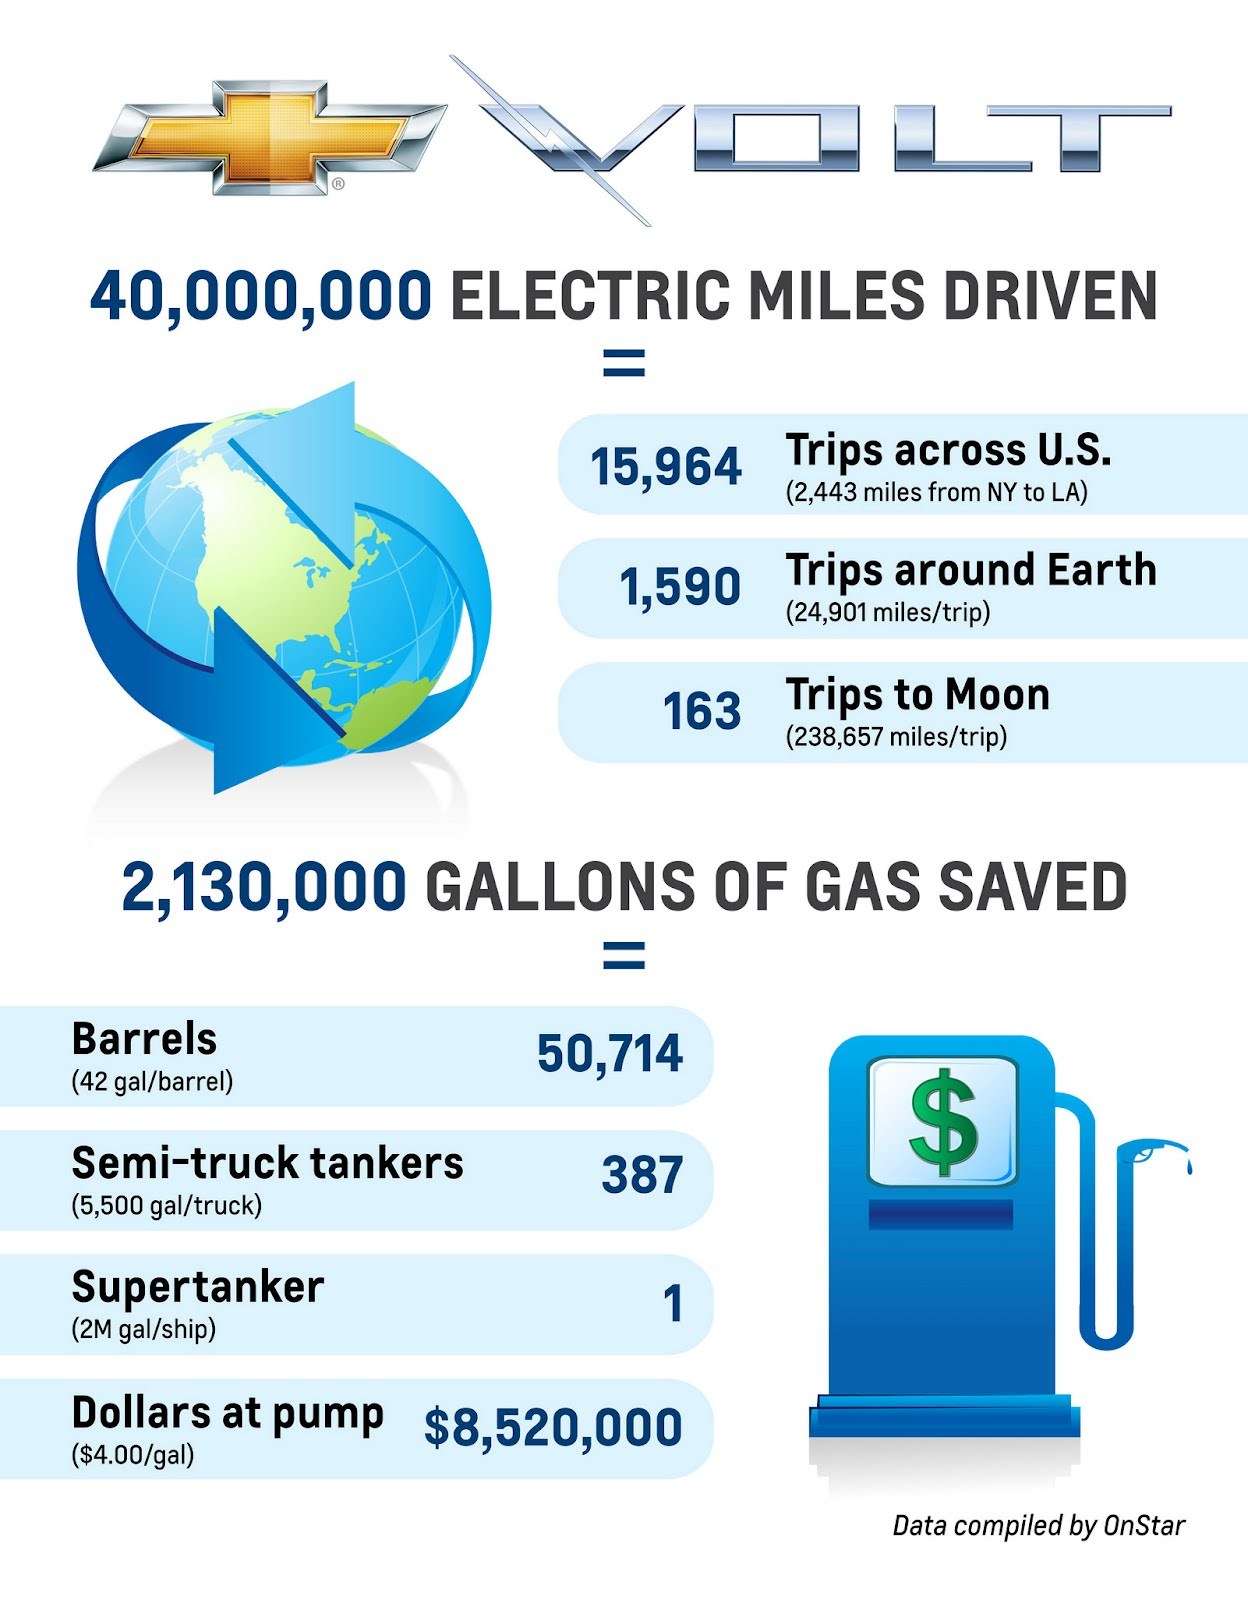 Soferii de Chevrolet Volt au economisit pana acum peste 8 milioane de litri de benzina